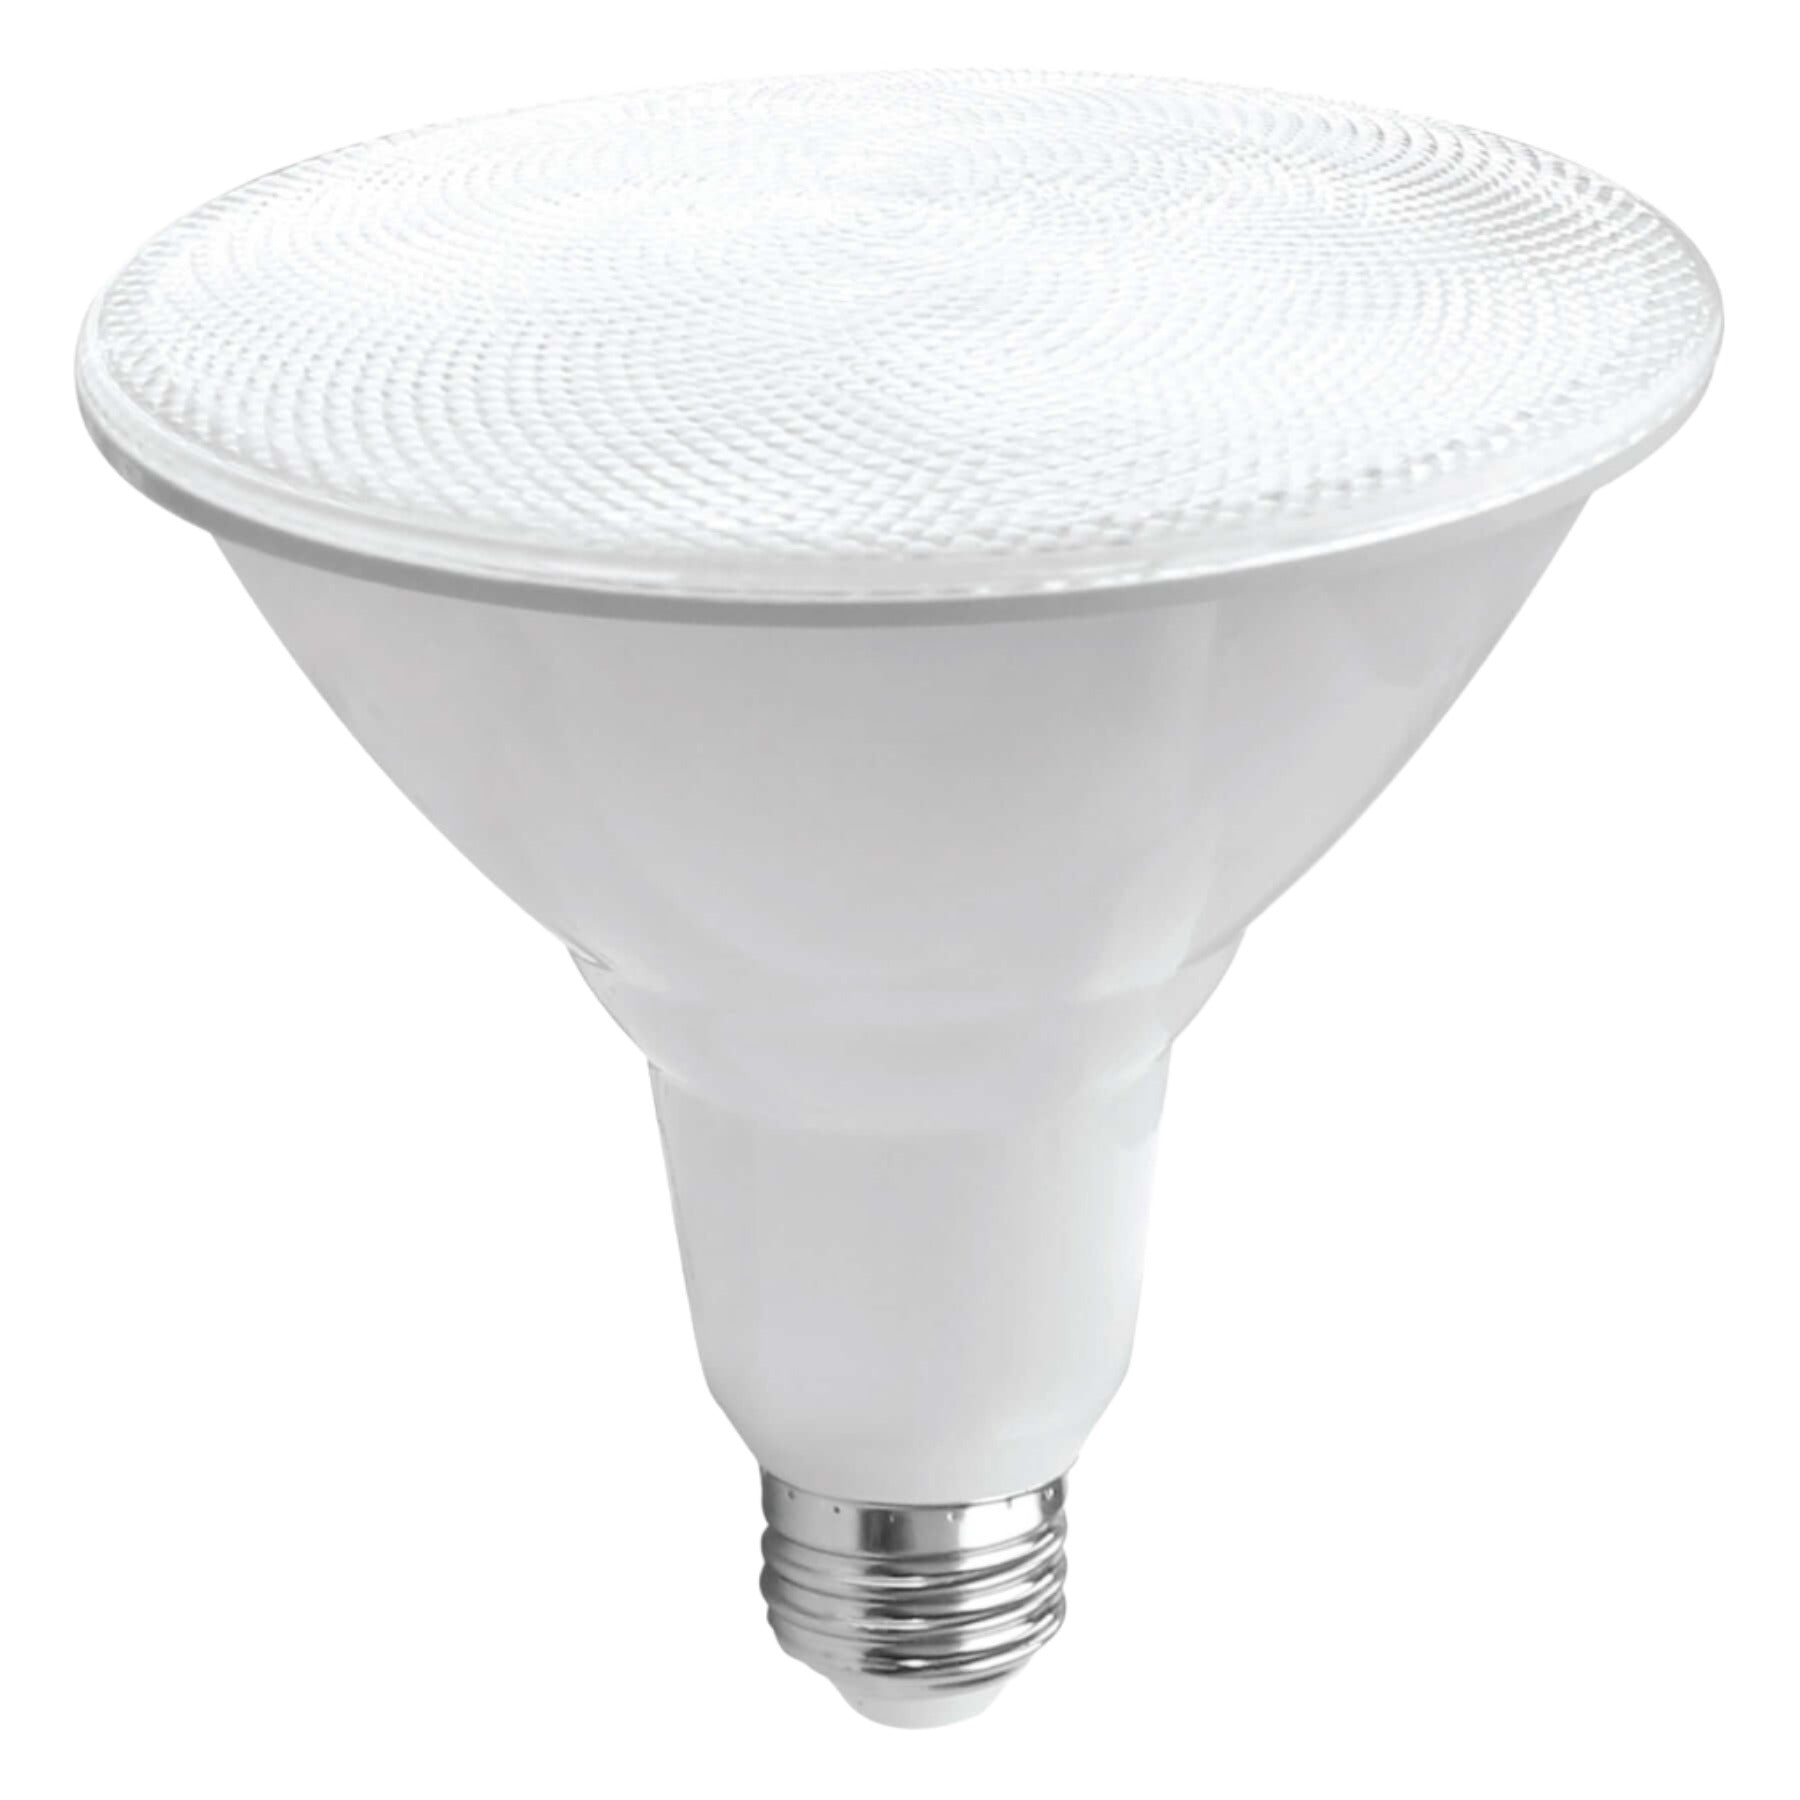 Viribright - 100-Watt Equivalent PAR38 Shape E26 Base LED Light Bulb 1500 Lumen - 654657-4